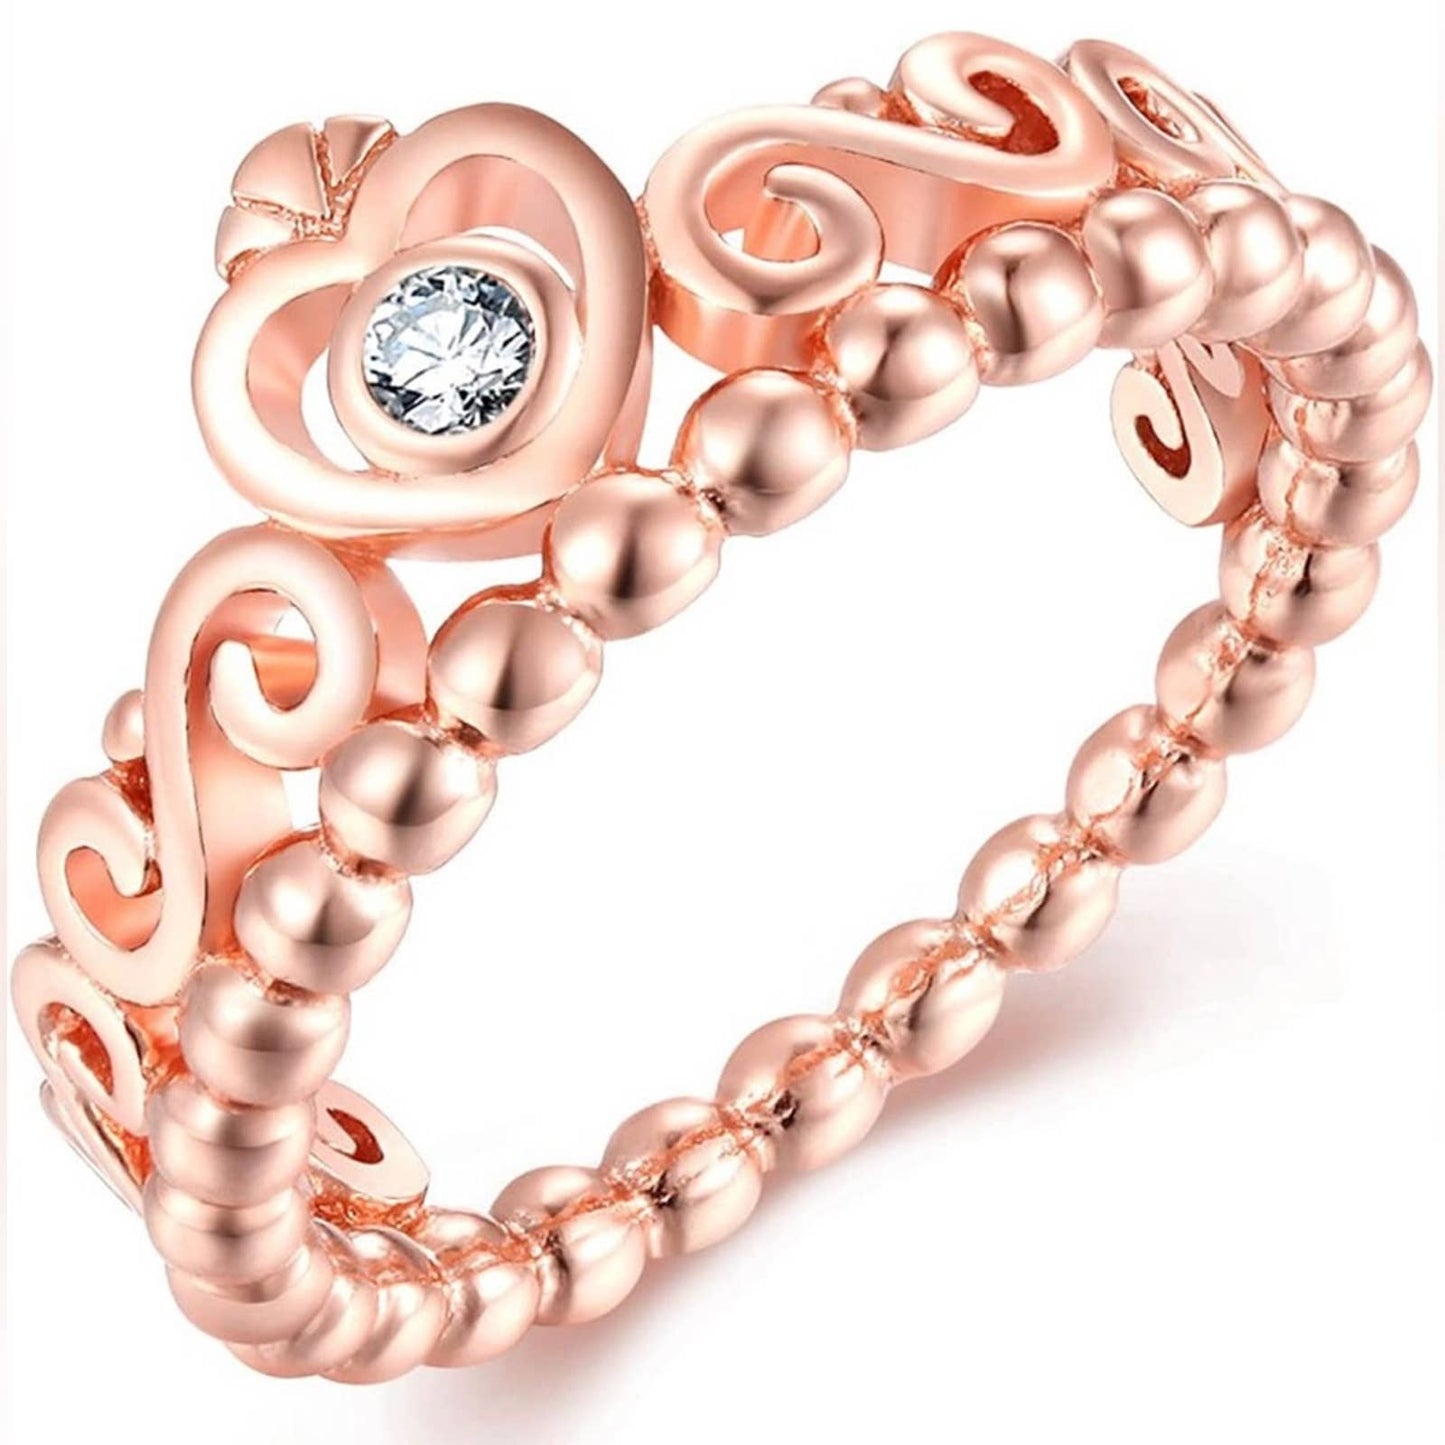 Presentski Rose Golden Plated Ring Fashion 925 Sterling Silver Princess Size 8